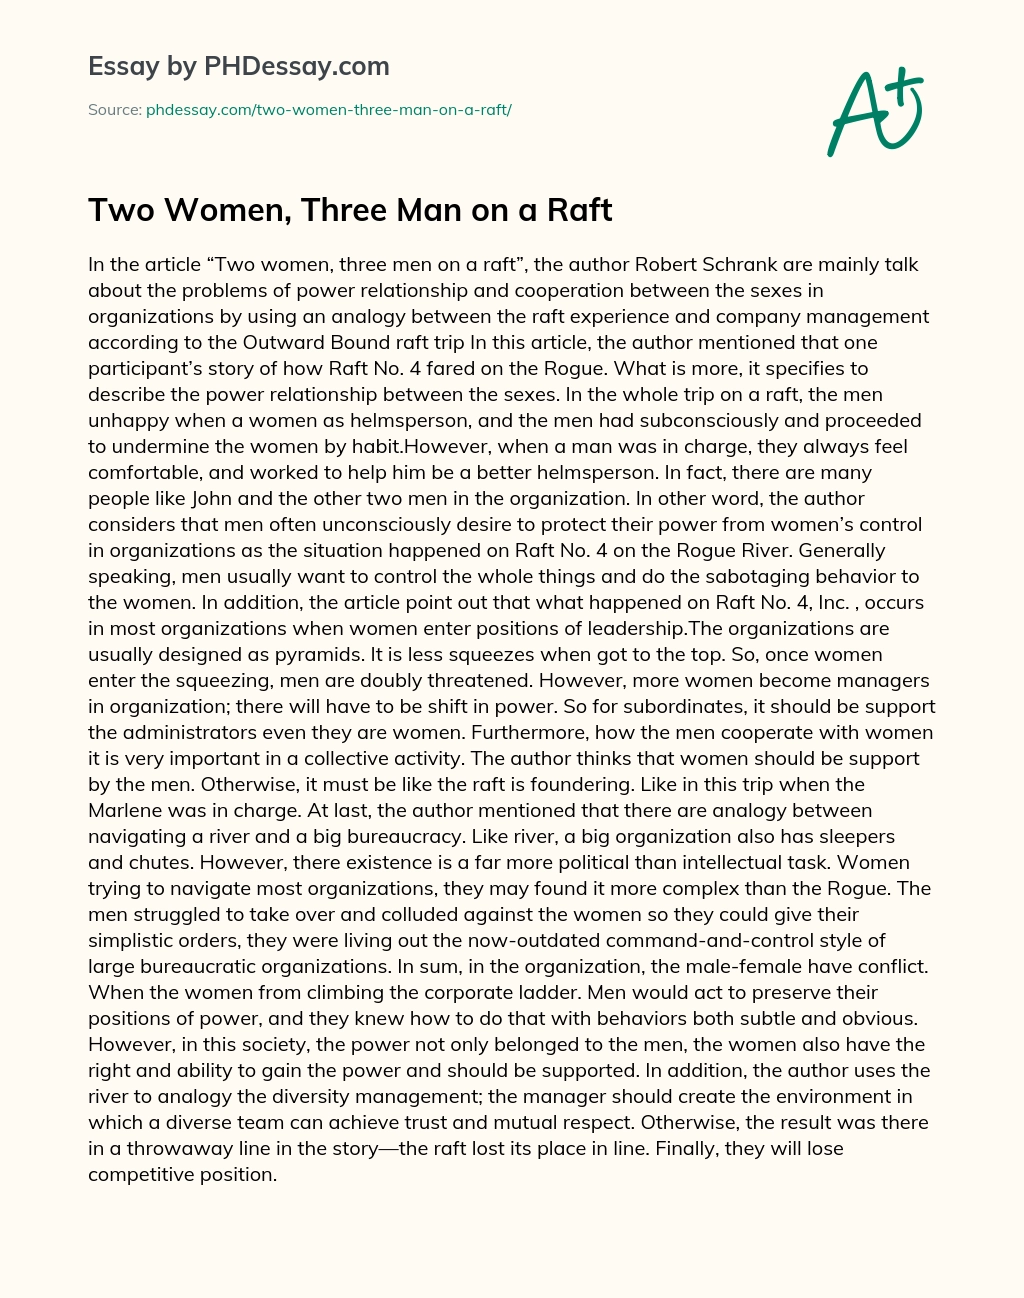 Two Women, Three Man on a Raft essay